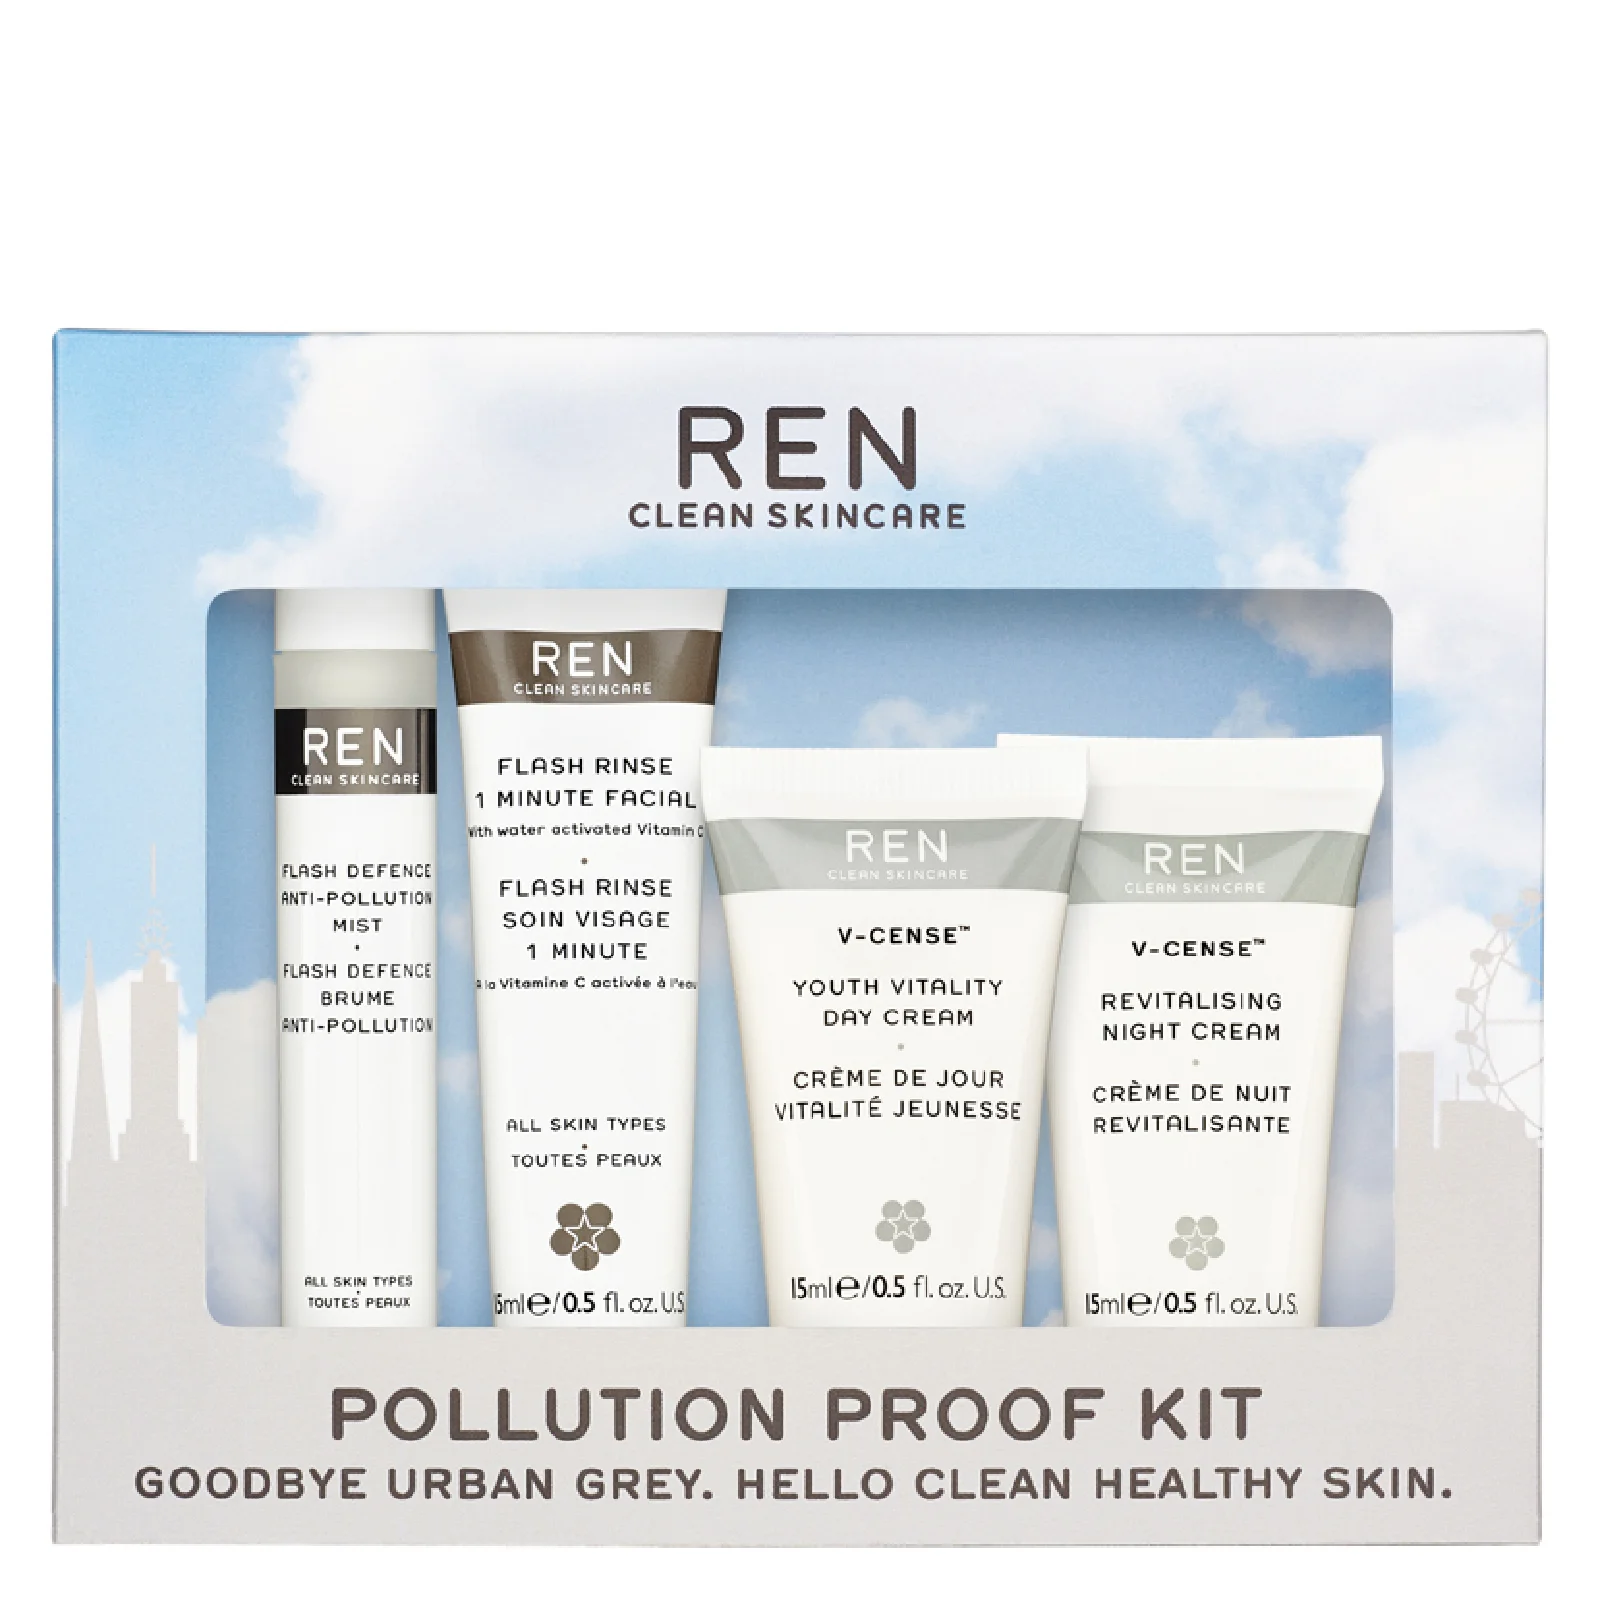 REN Pollution Proof Kit Image 1